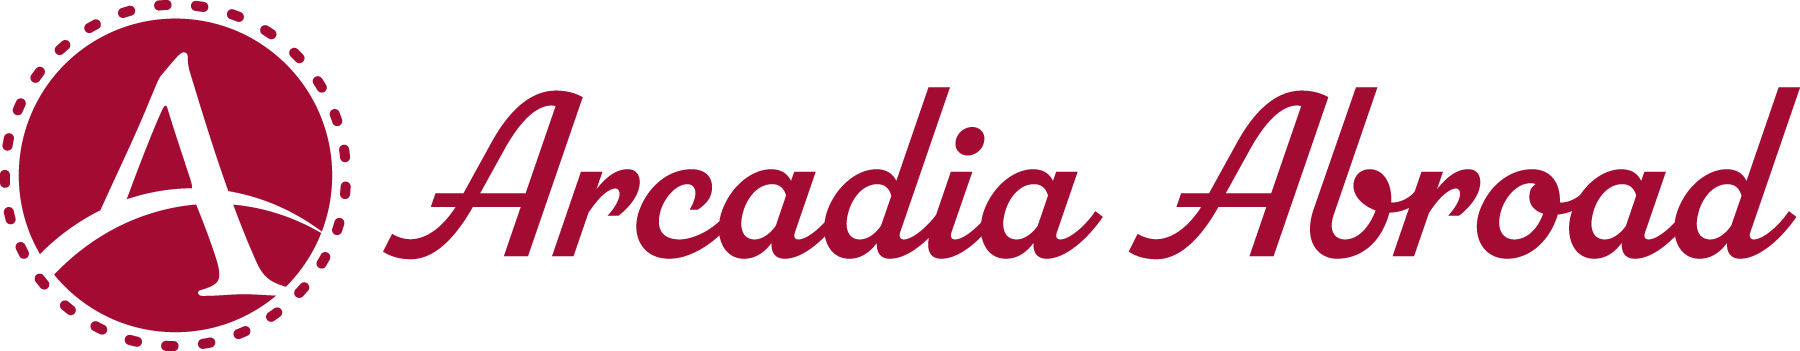 Arcadia Abroad logo